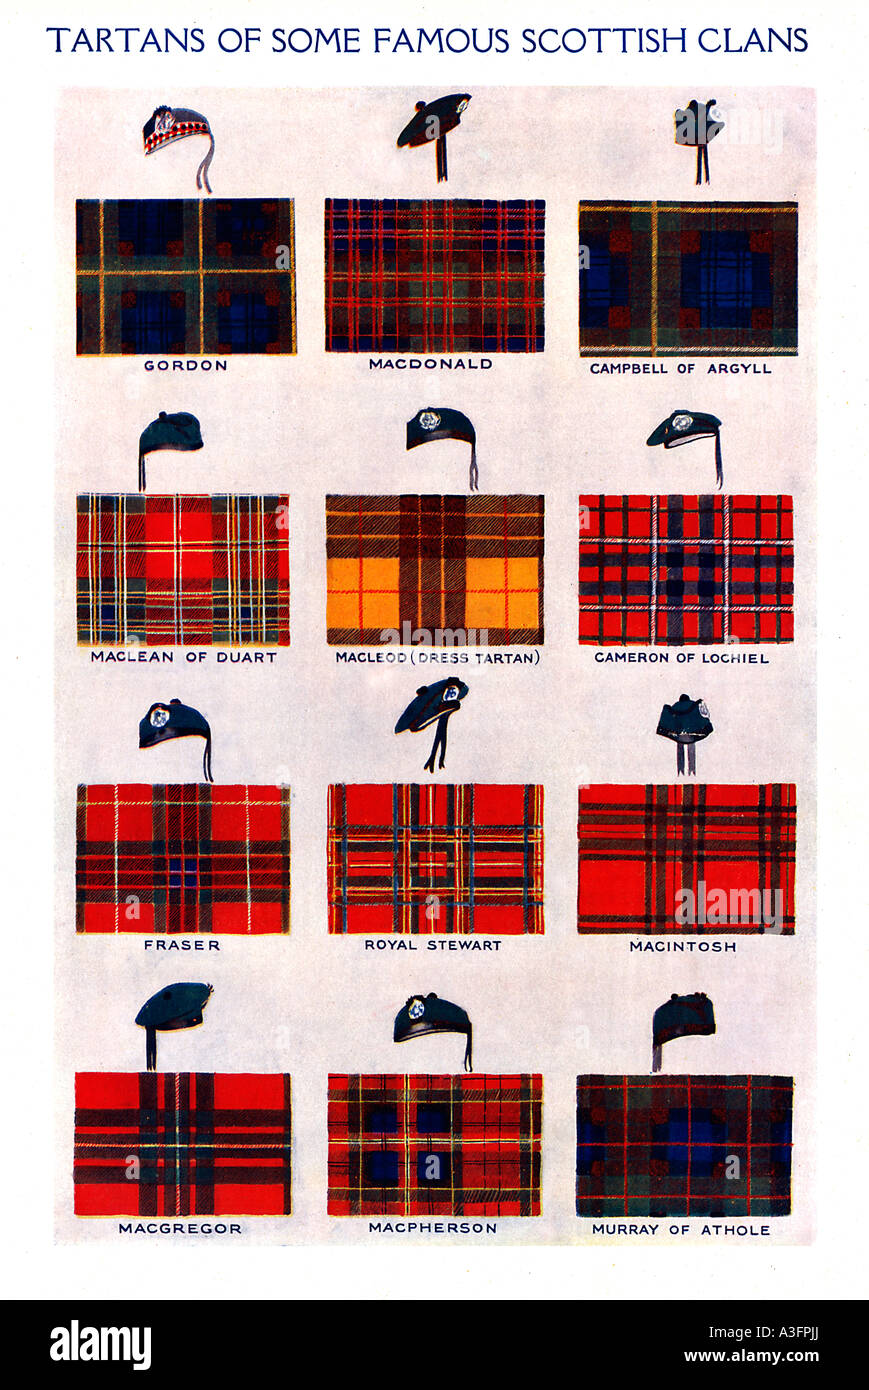 Famous Scottish Tartans 1920s boys magazine illustration of the main Tartans of the Clans of Scotland Stock Photo